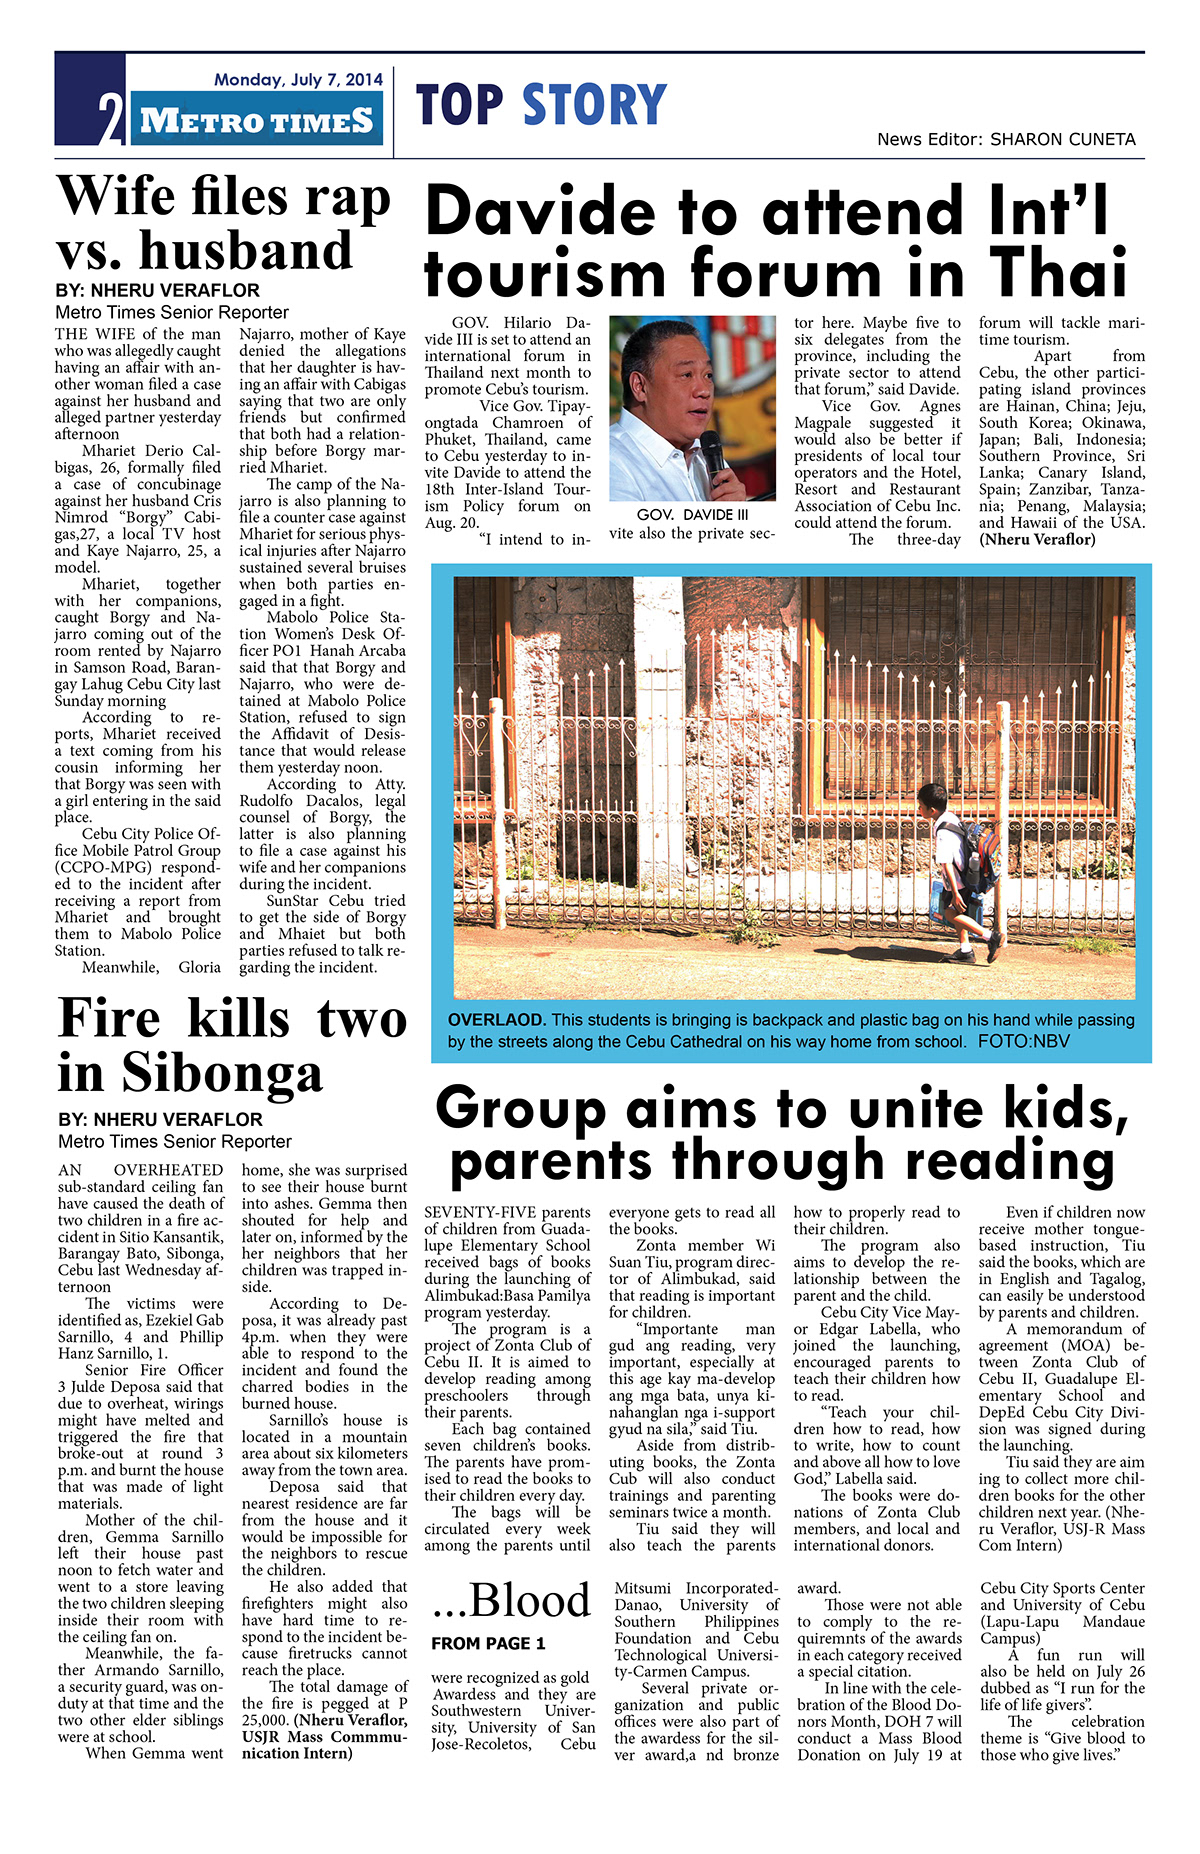 cebu newspaper usjr